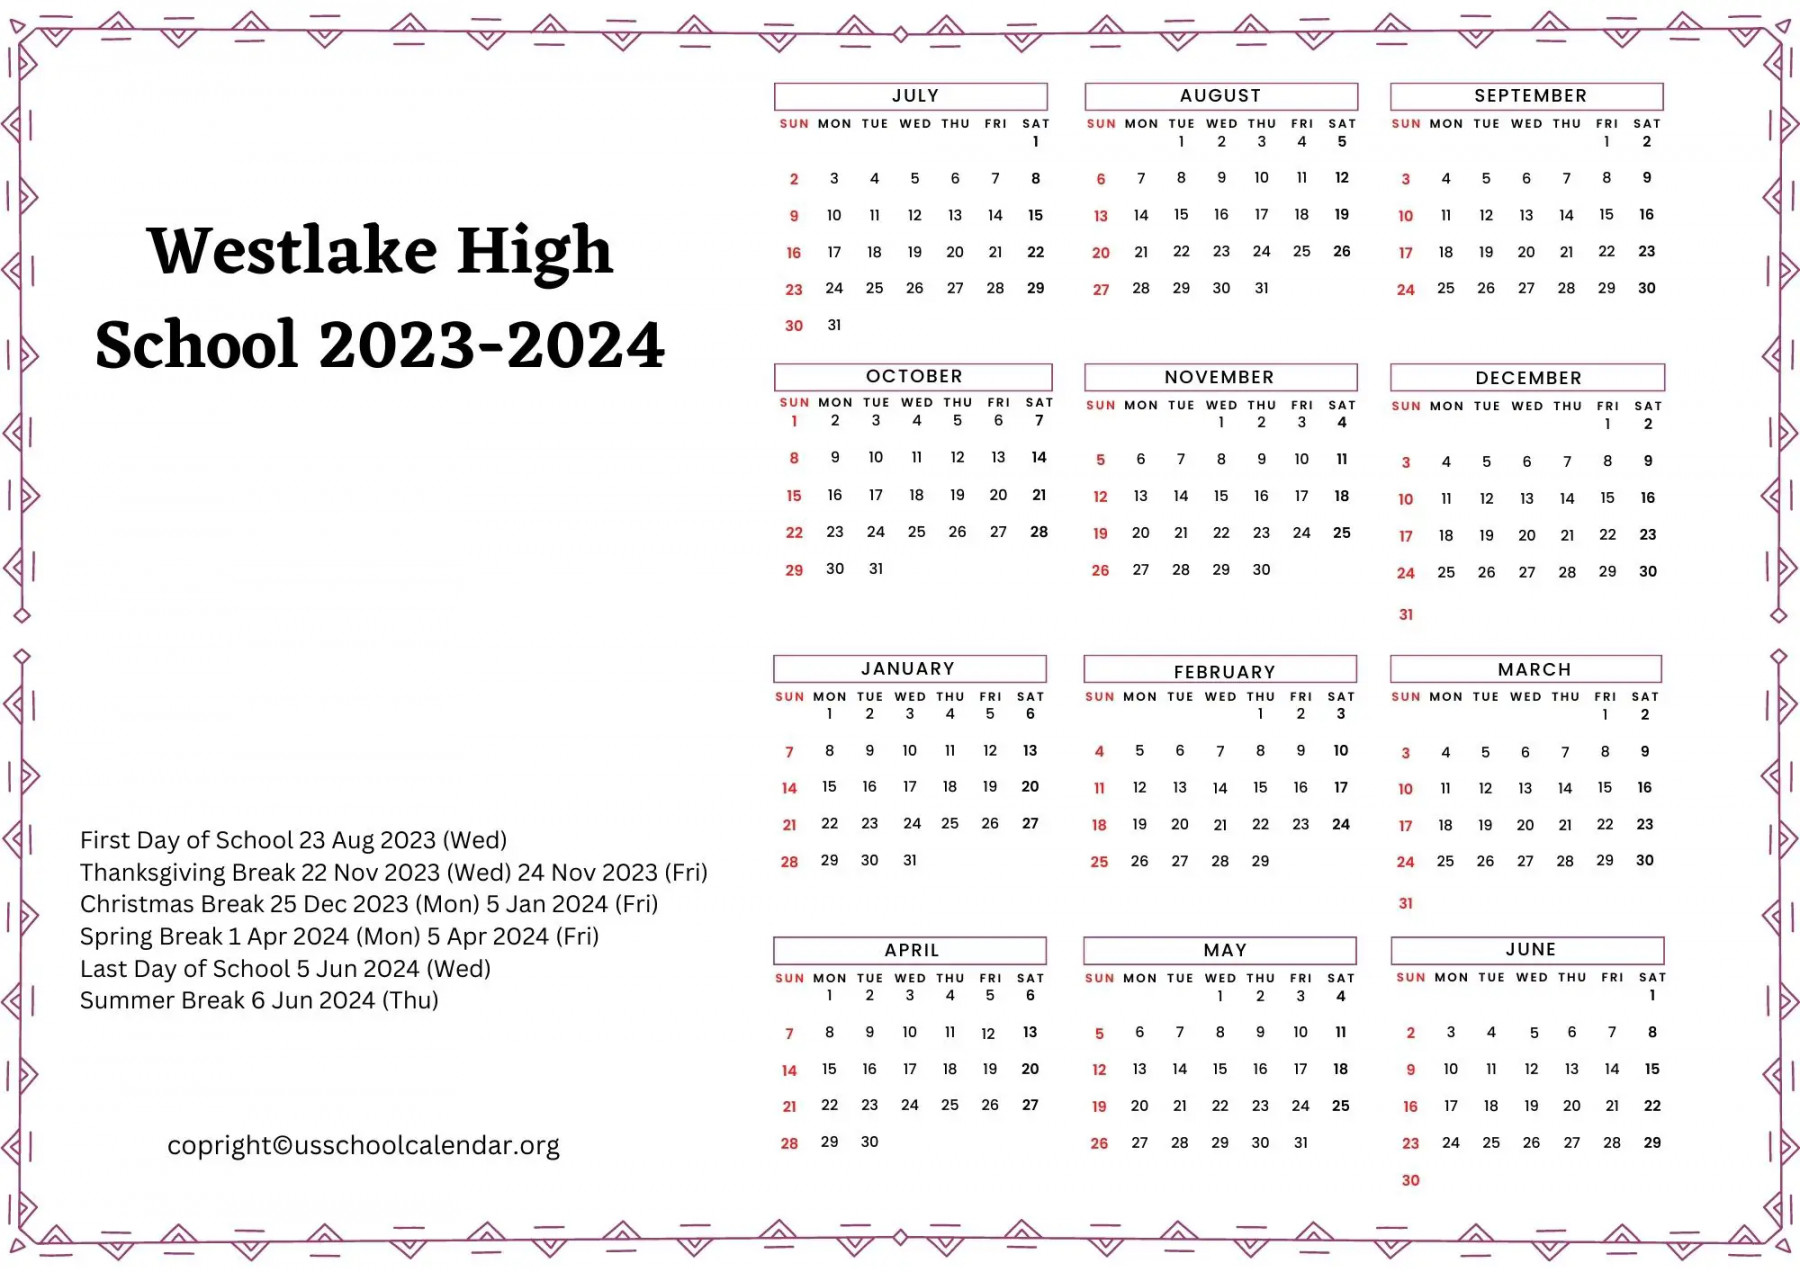 Westlake High School Calendar with Holidays -